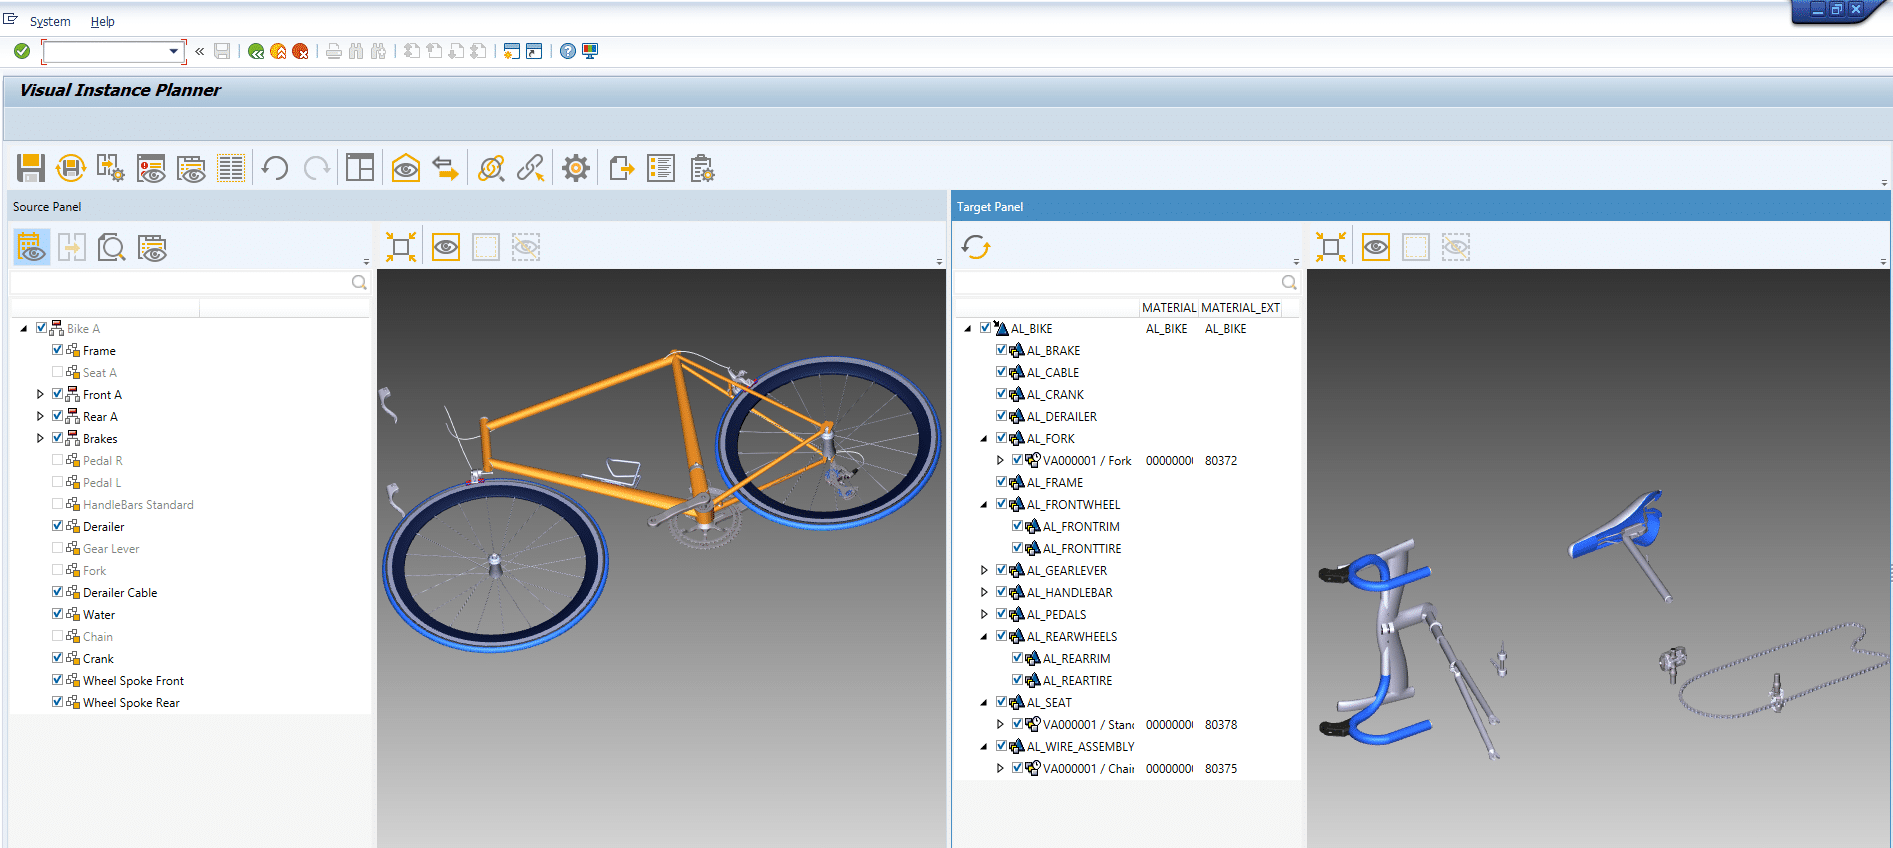 SAP 3D Visual Enterprise Manufacturing Planner